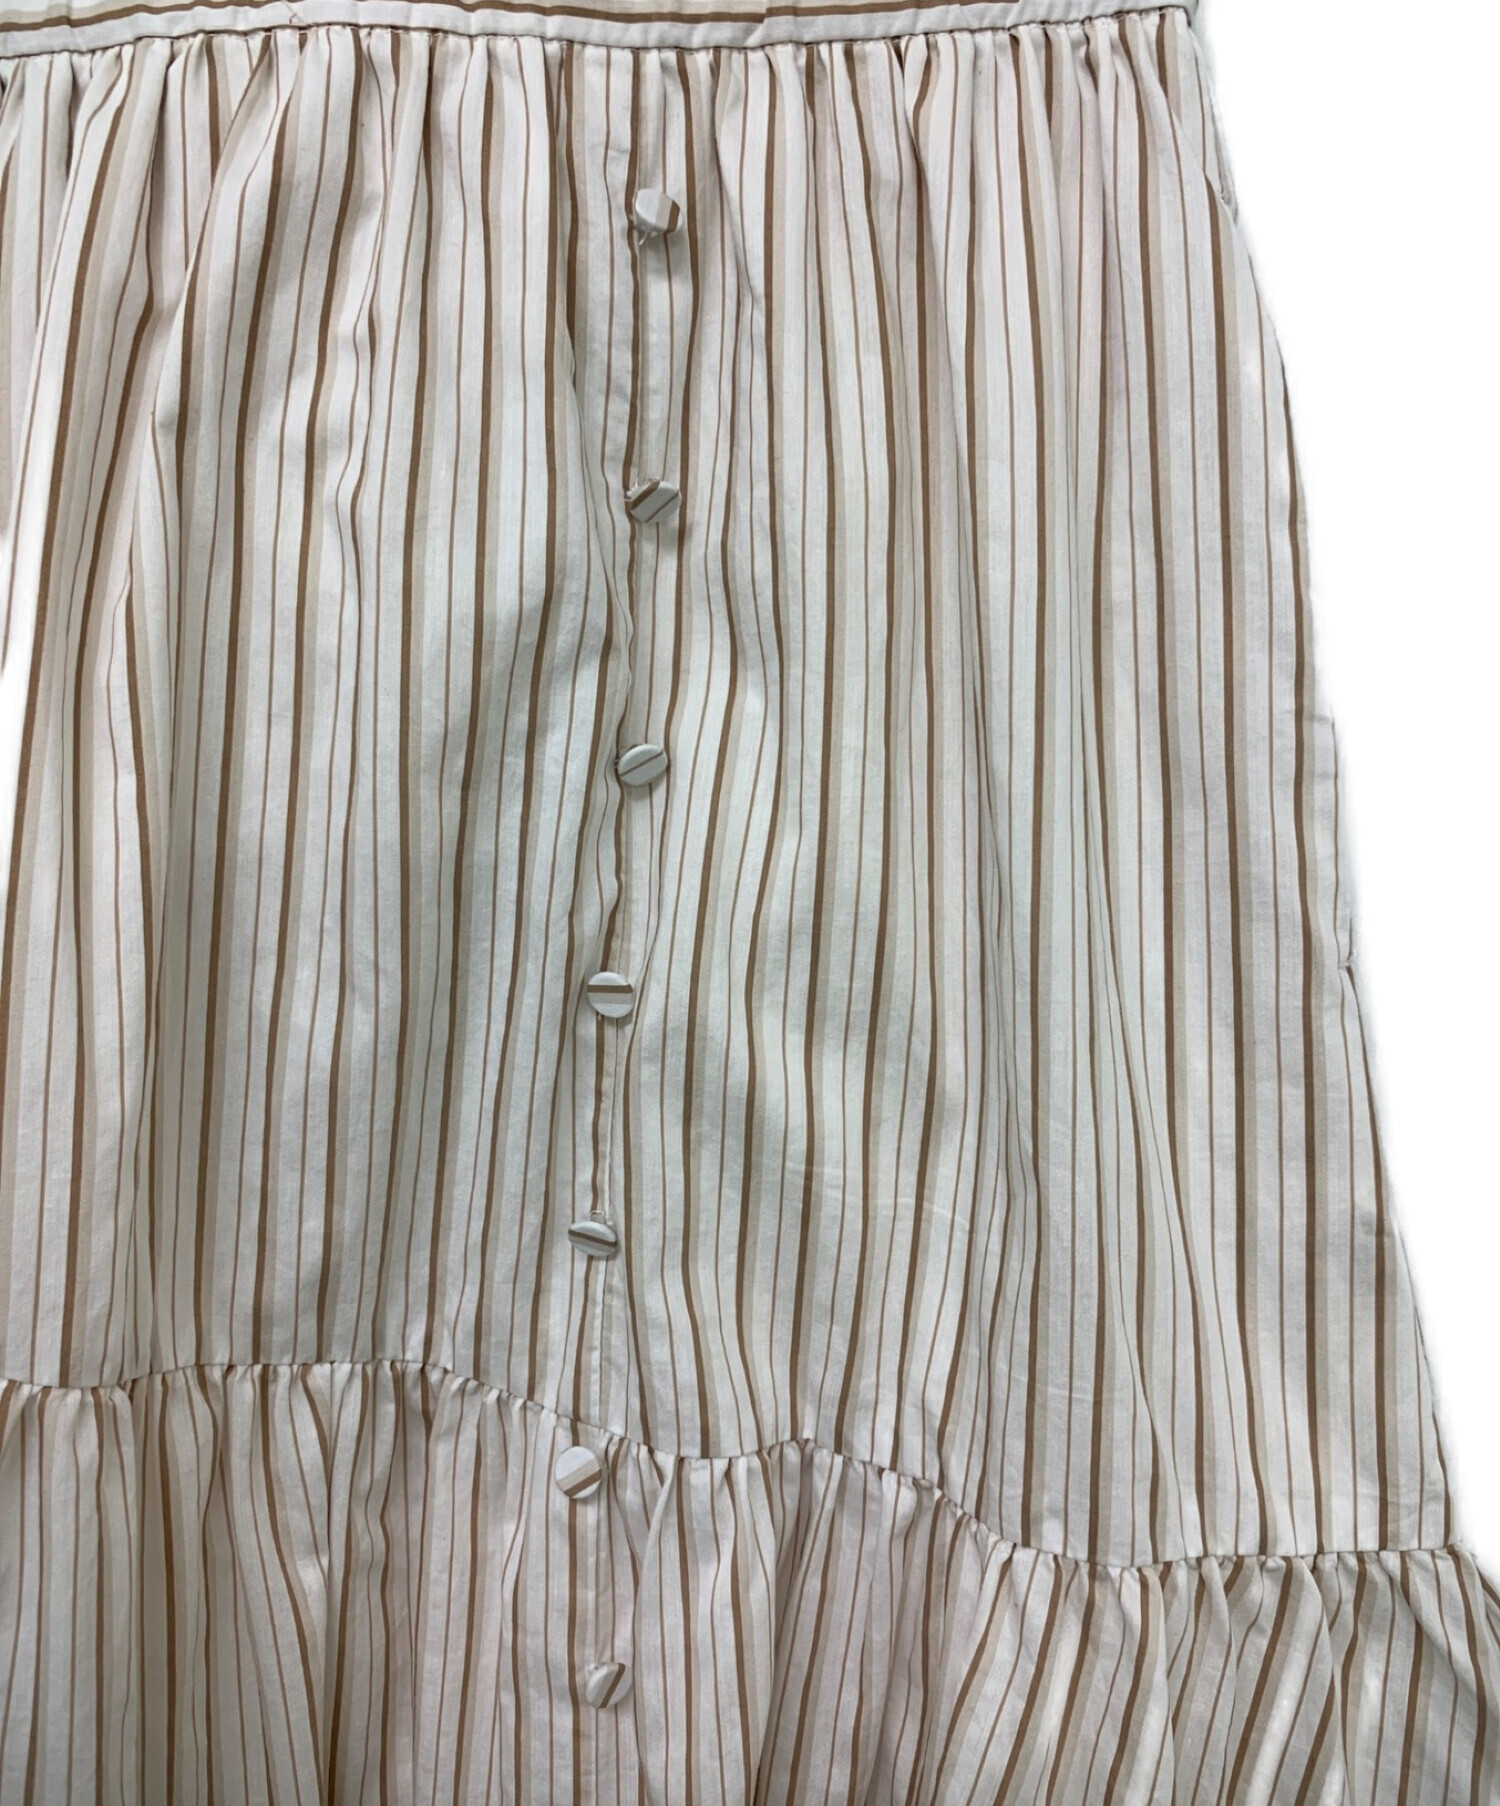 Cotton-Blend Random Tiered Skirt